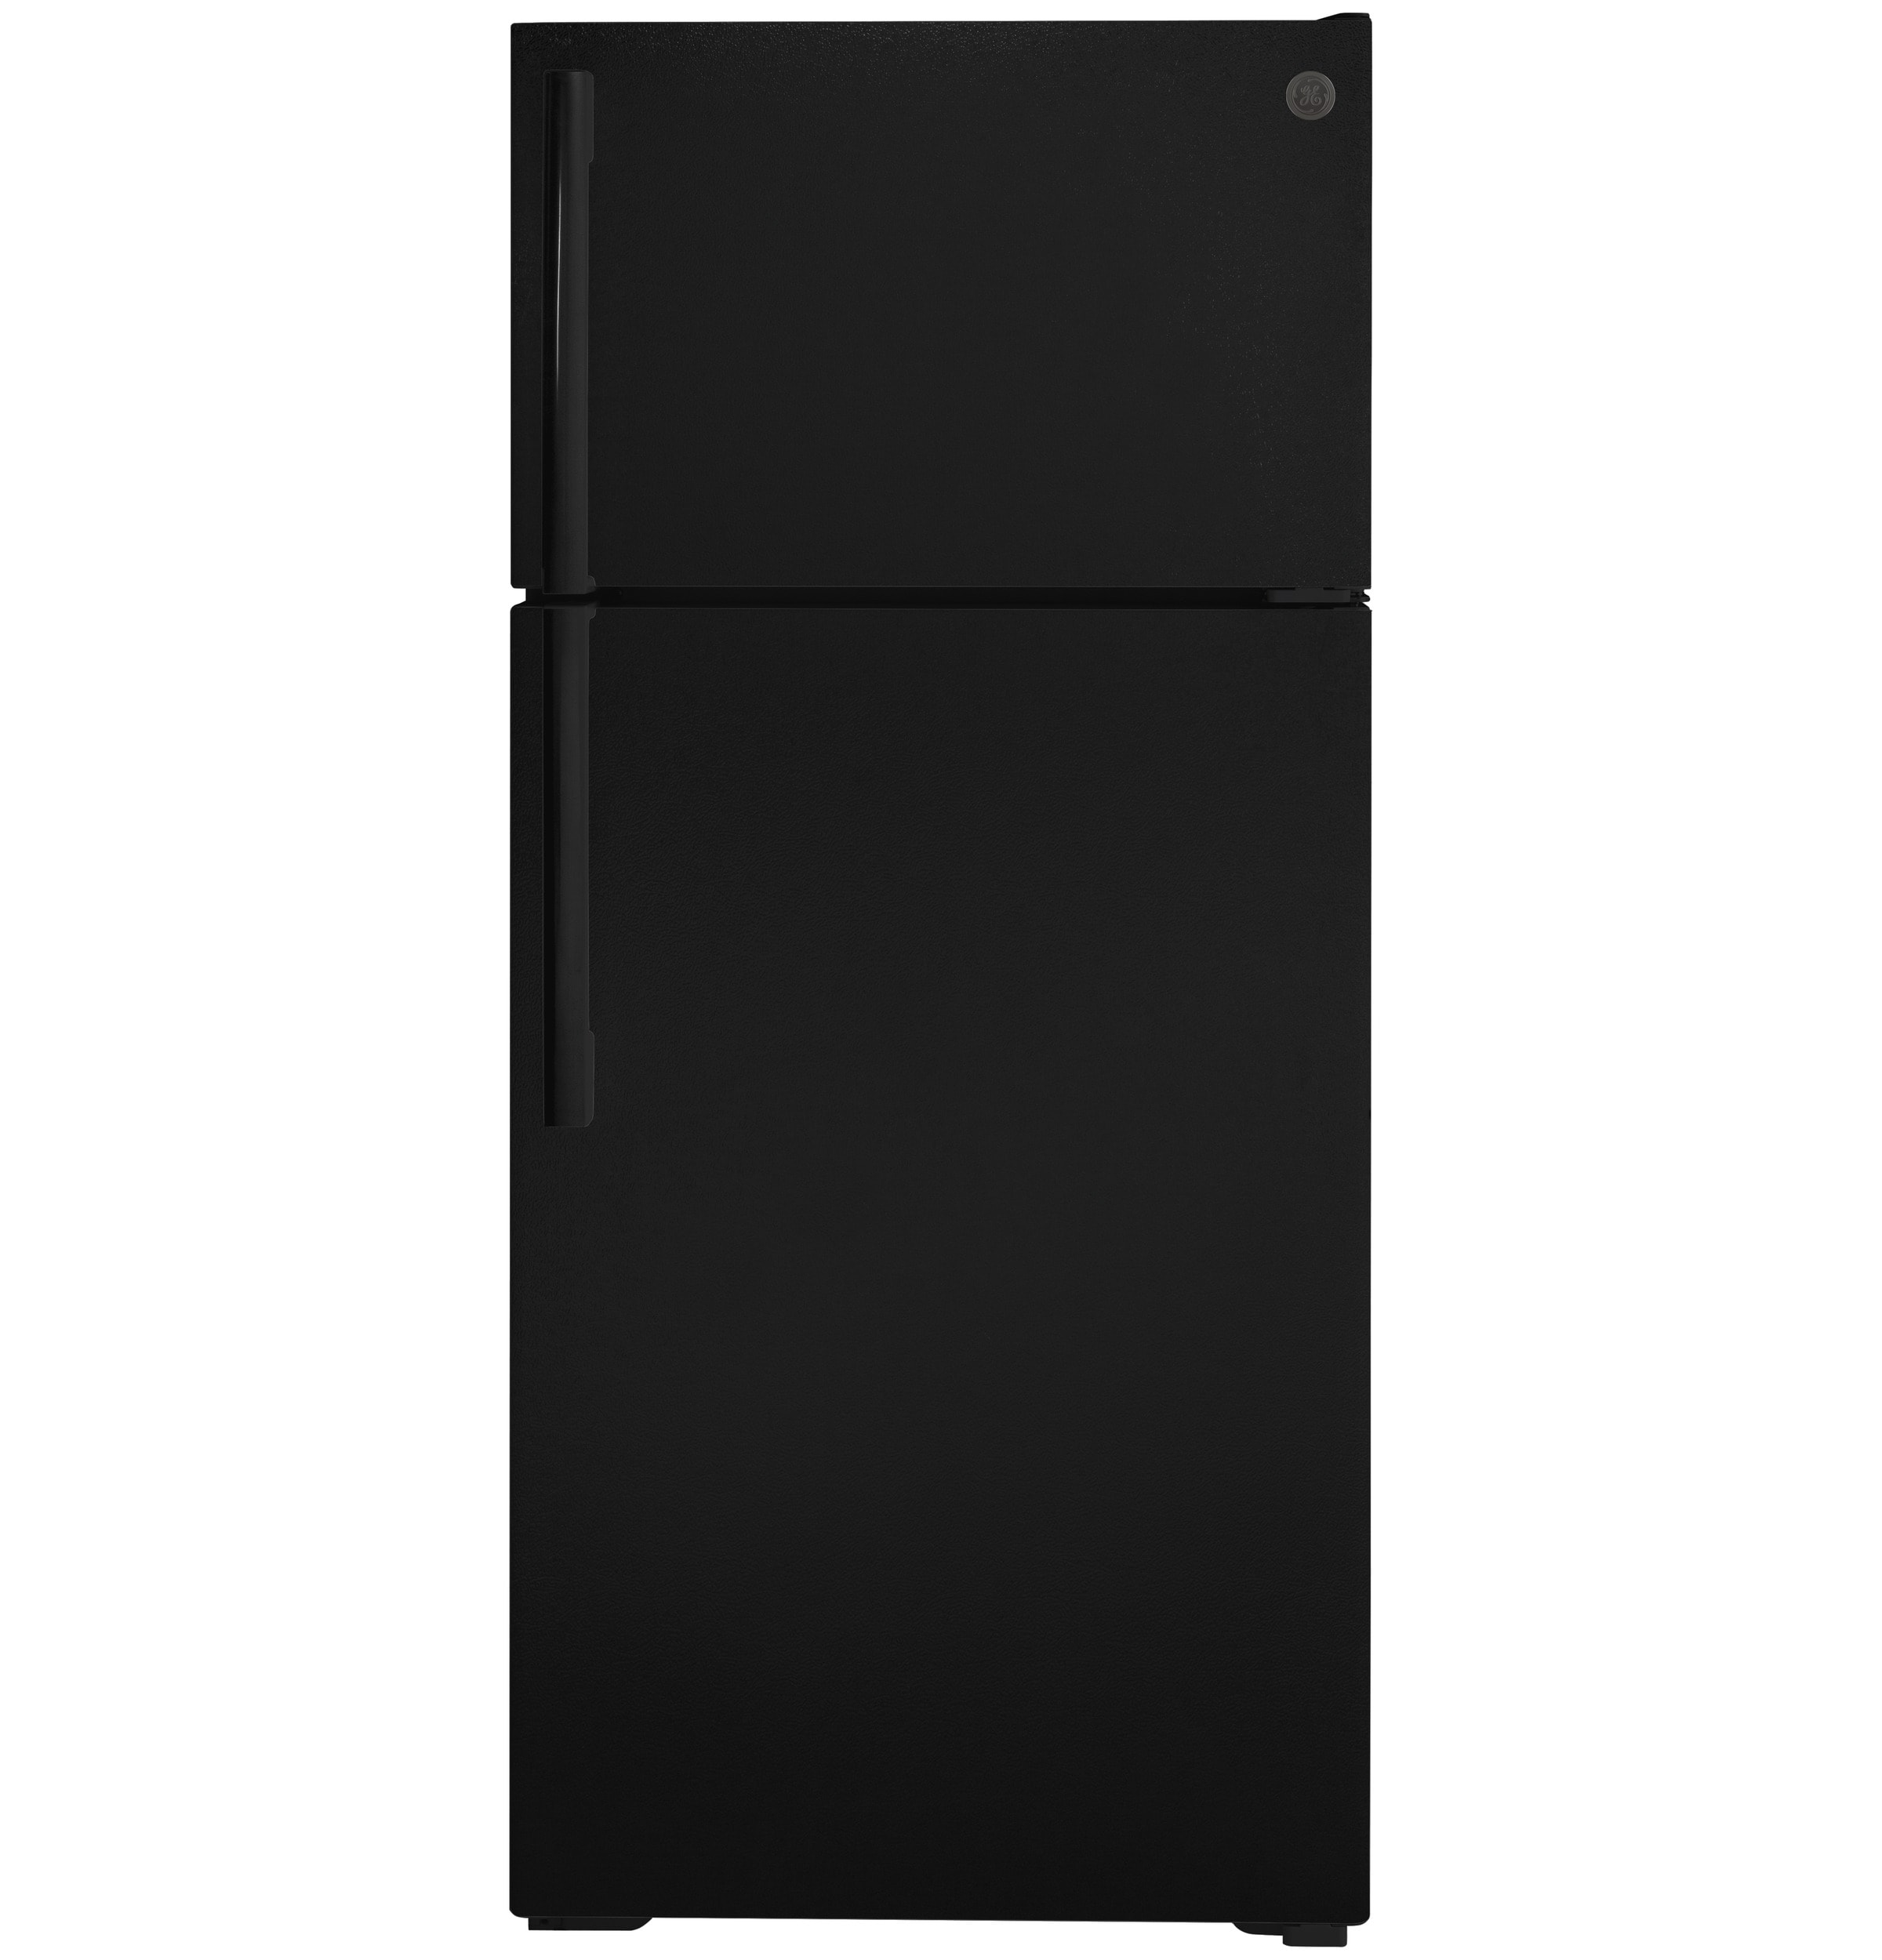 GE 16.6-cu ft Top-Freezer Refrigerator (Black) ENERGY STAR in the Top ...